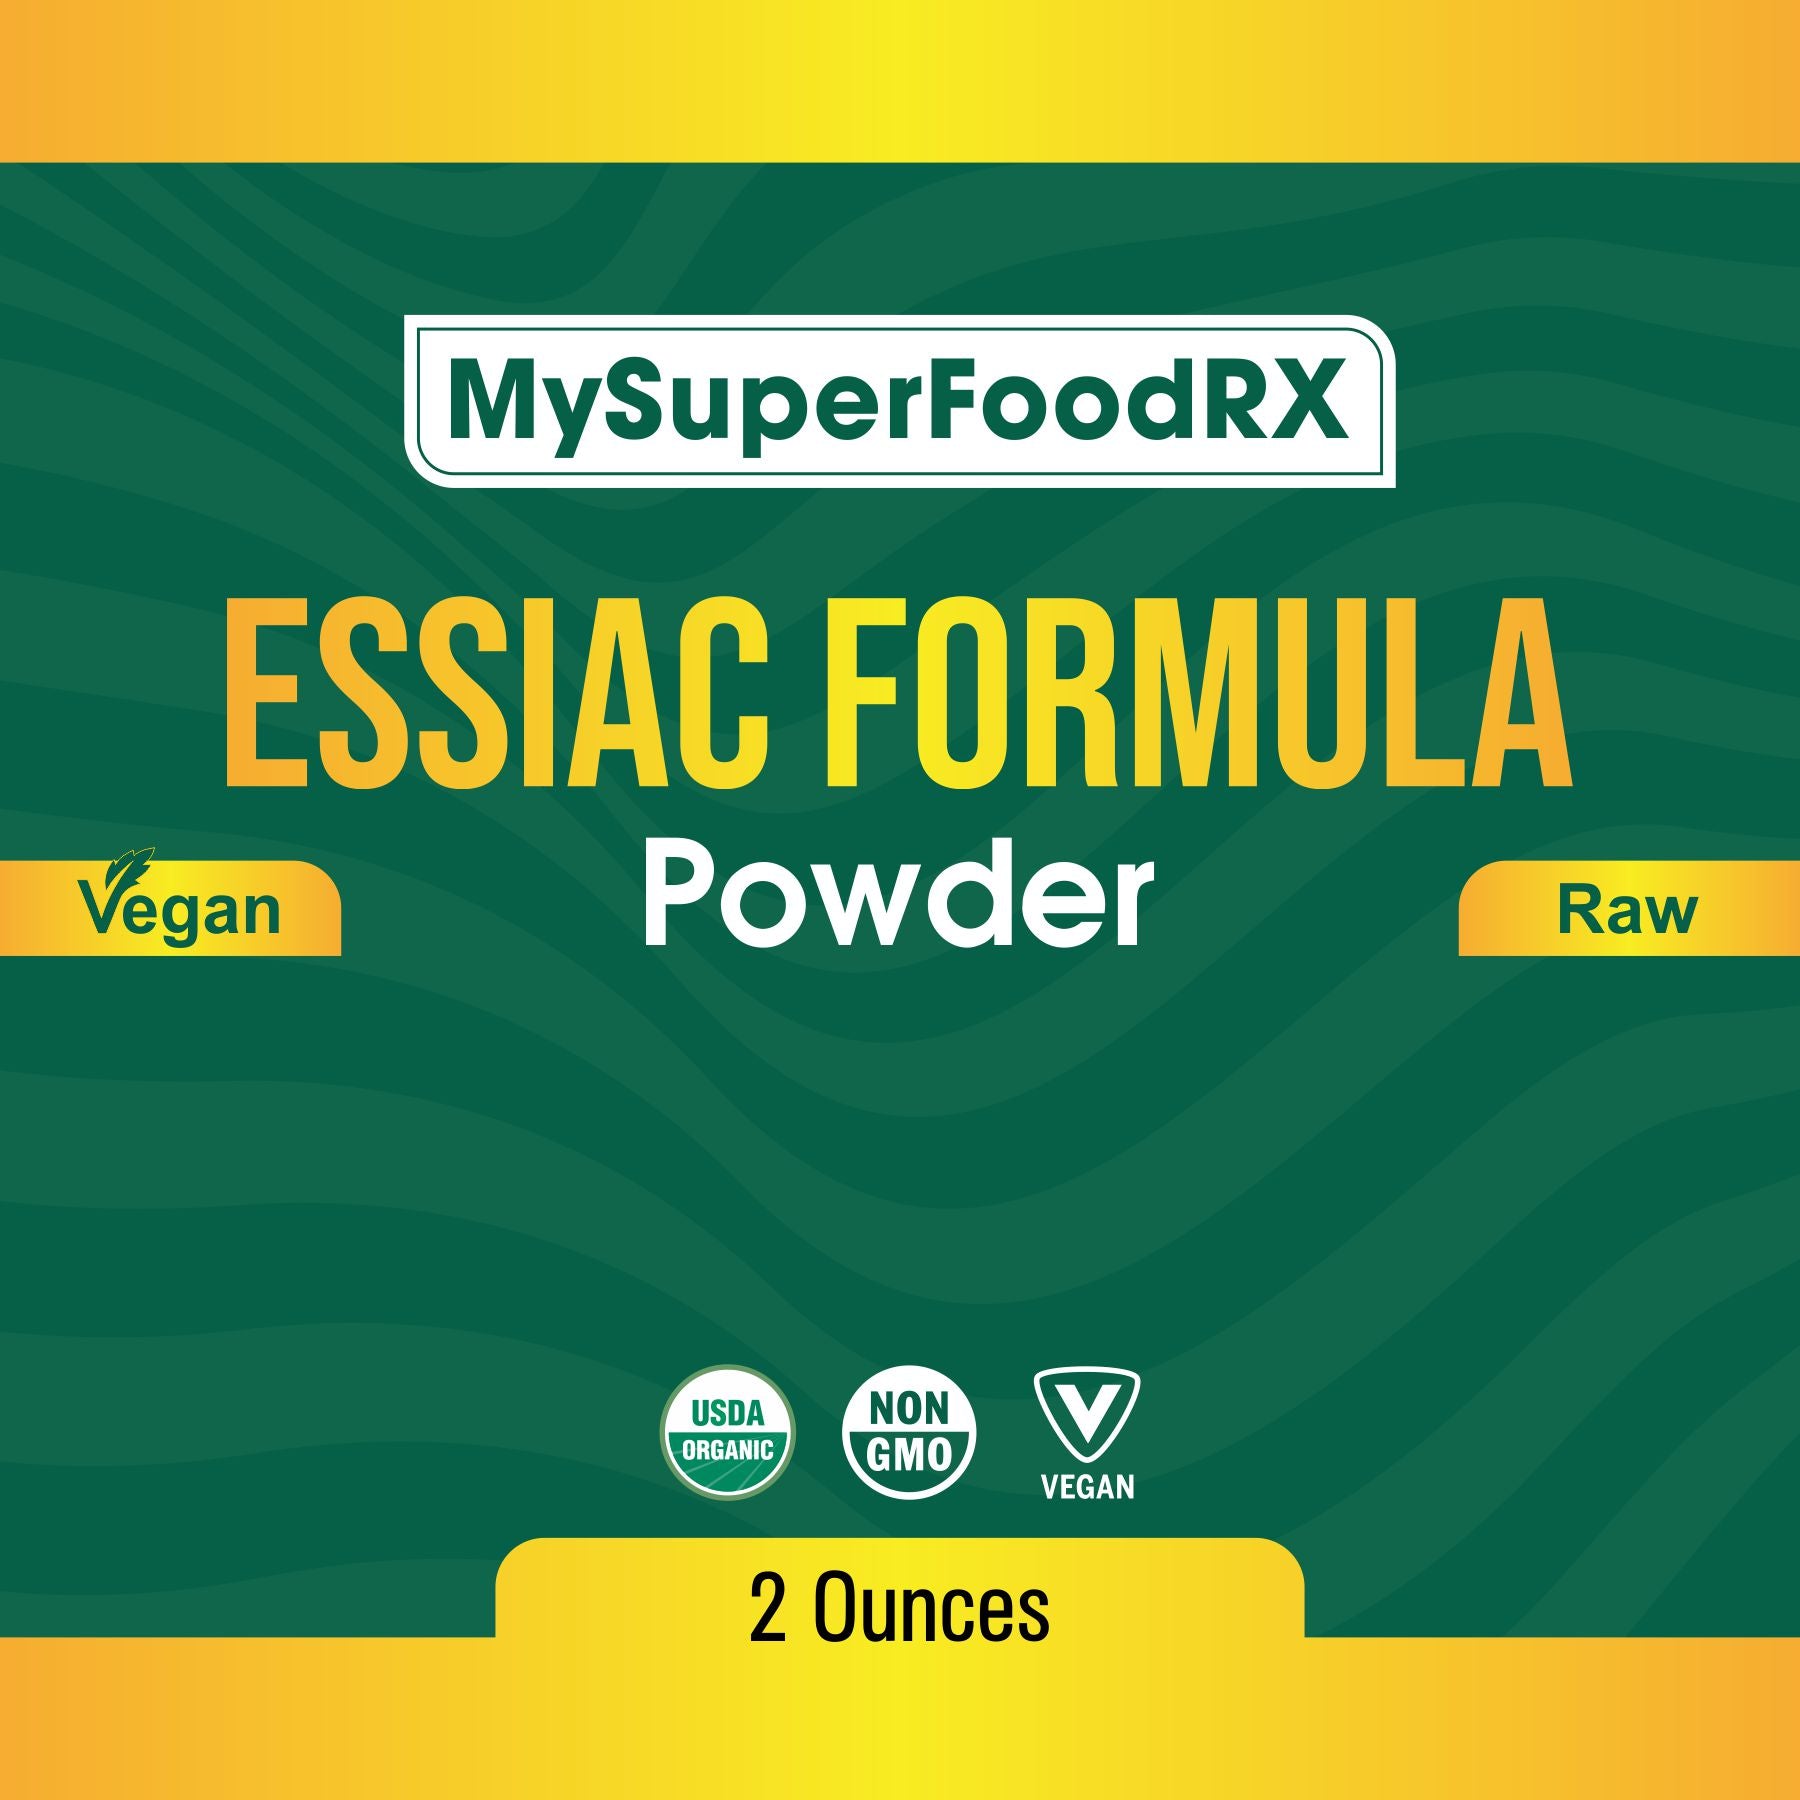 the label for my superfood rx essiac formula powder